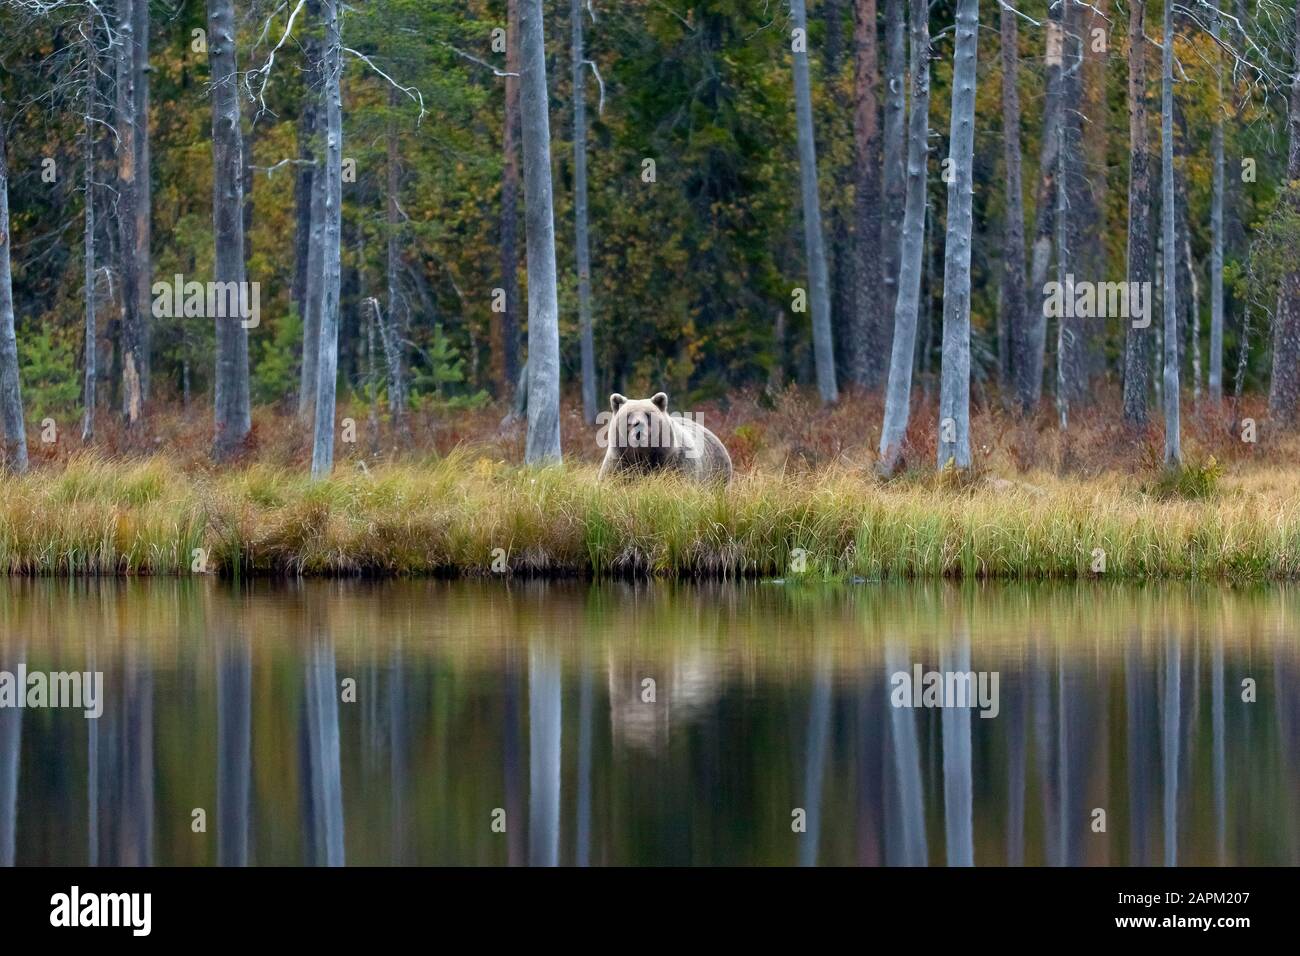 Finland, Kuhmo, Brown bear (Ursus arctos) standing on lakeshore in autumn taiga Stock Photo